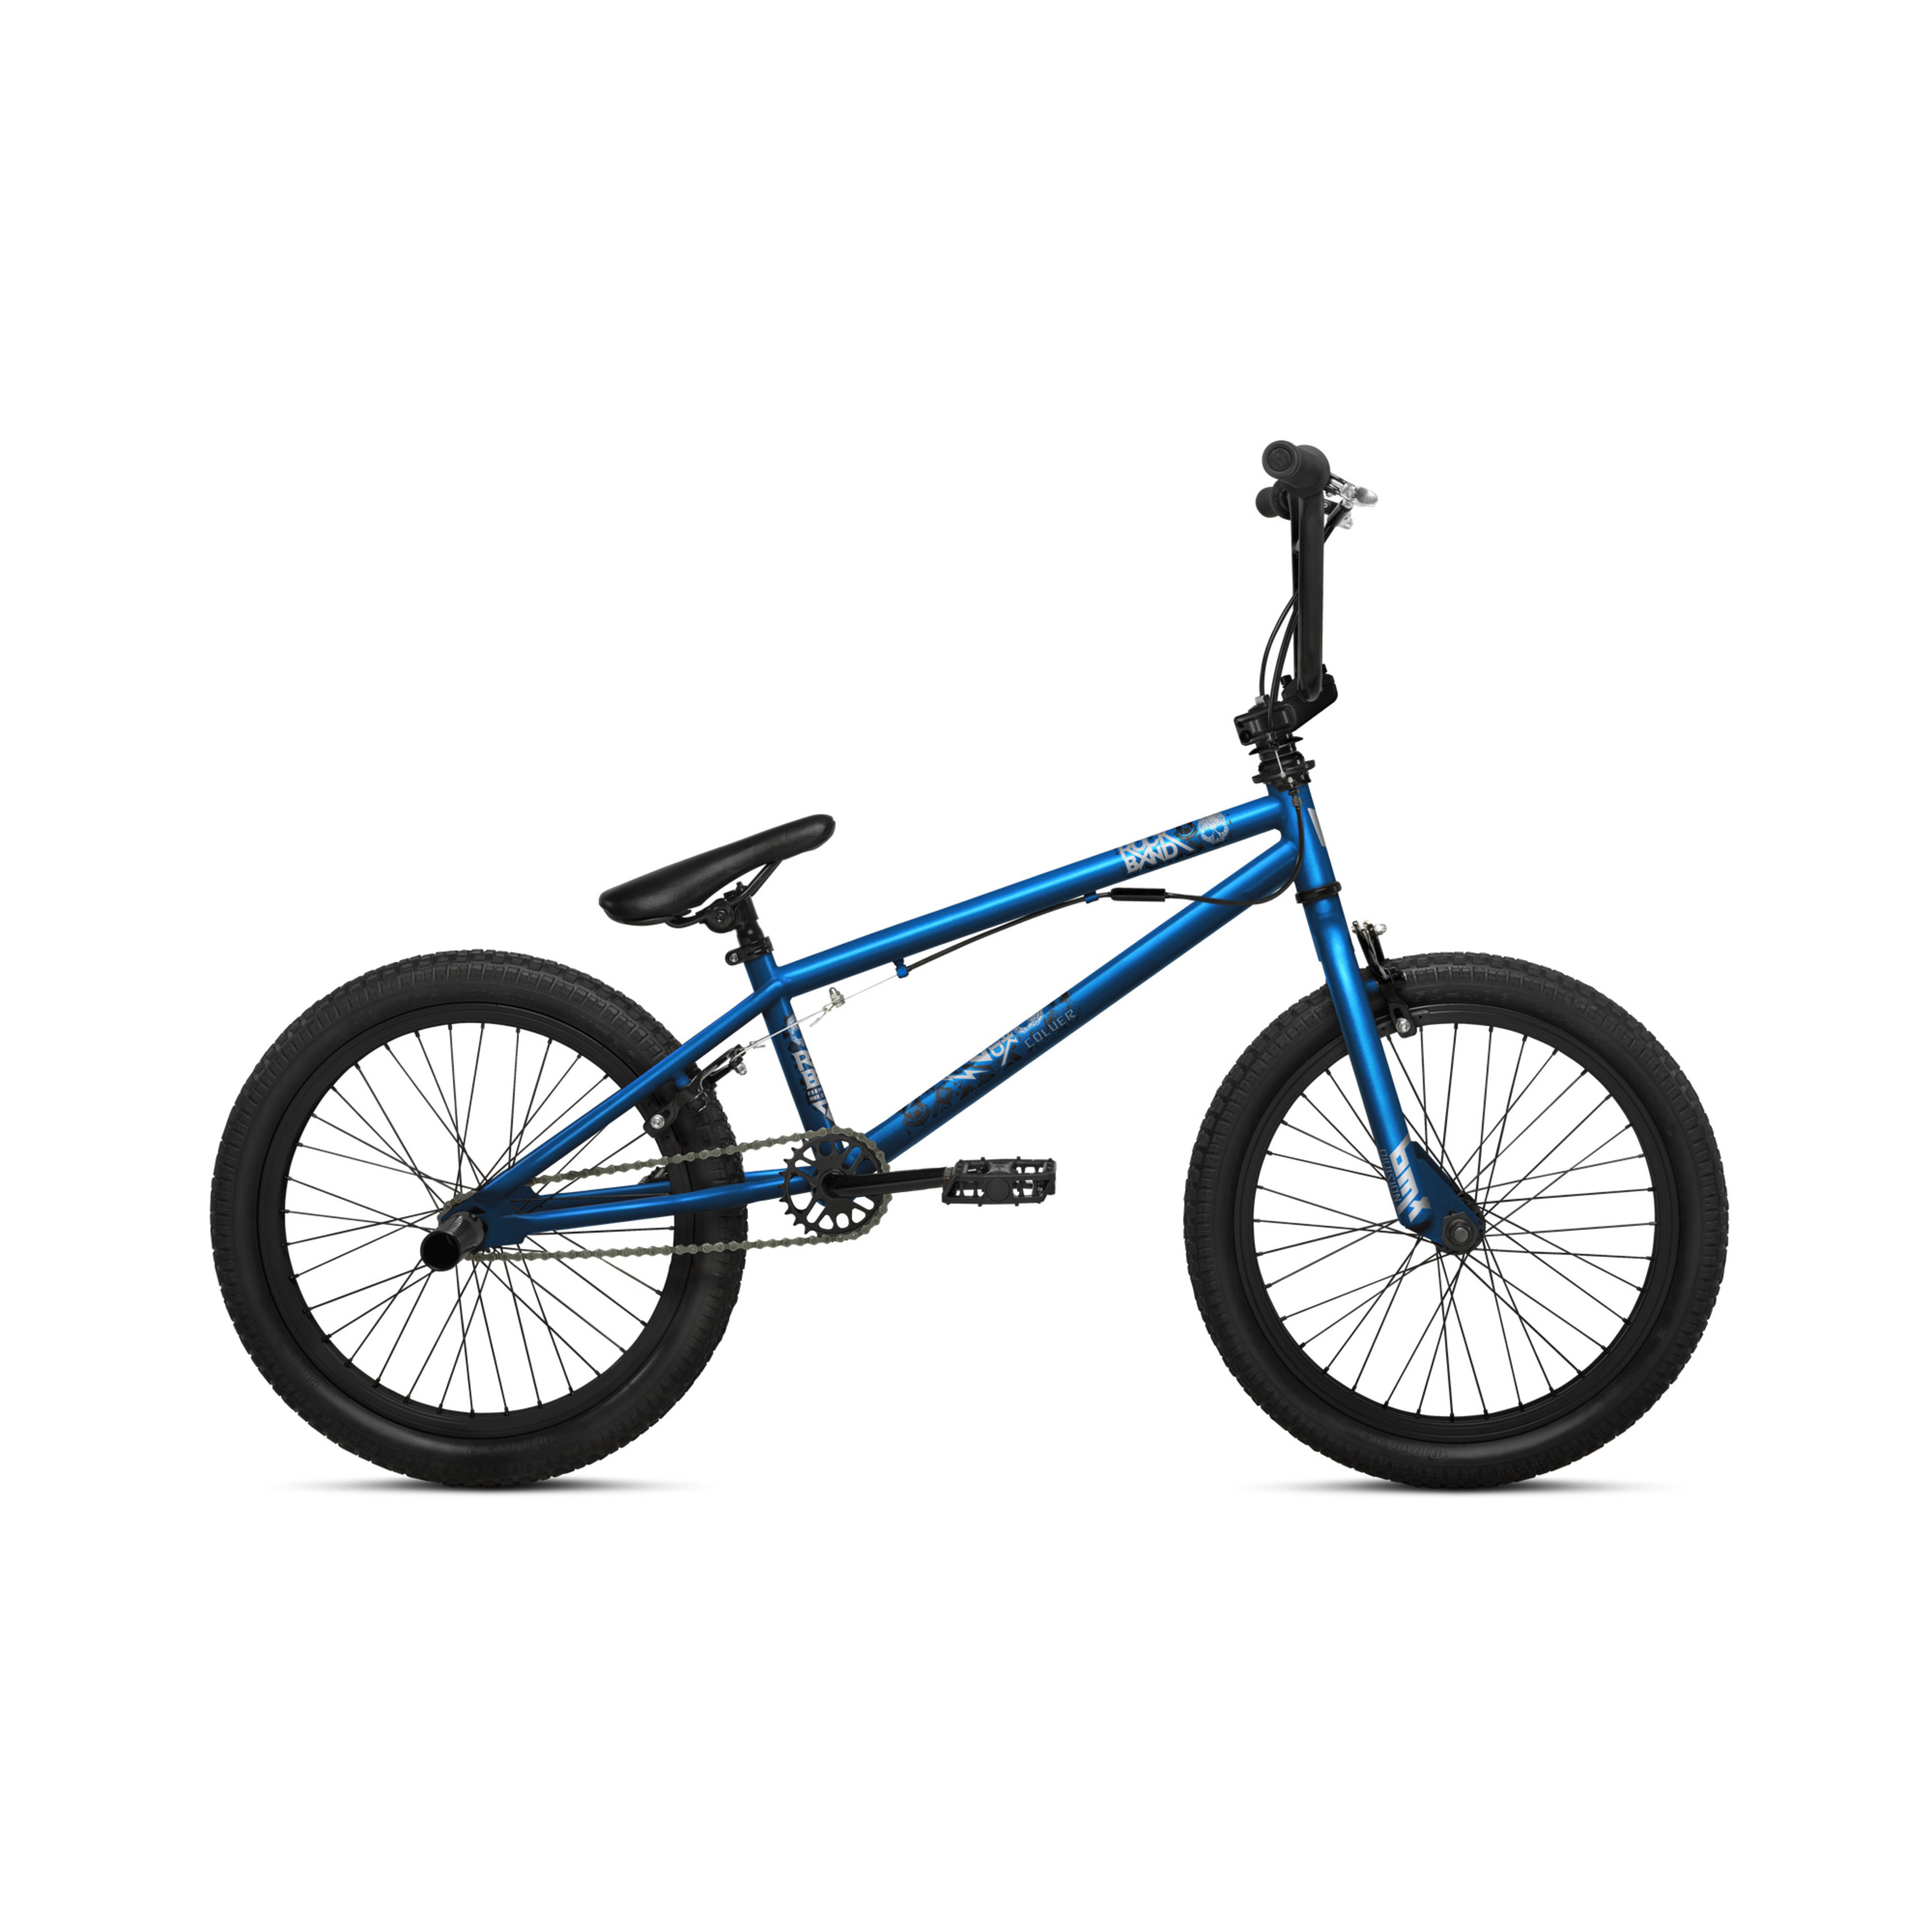 Bicicleta Bmx Coluer Rockband - azul - 